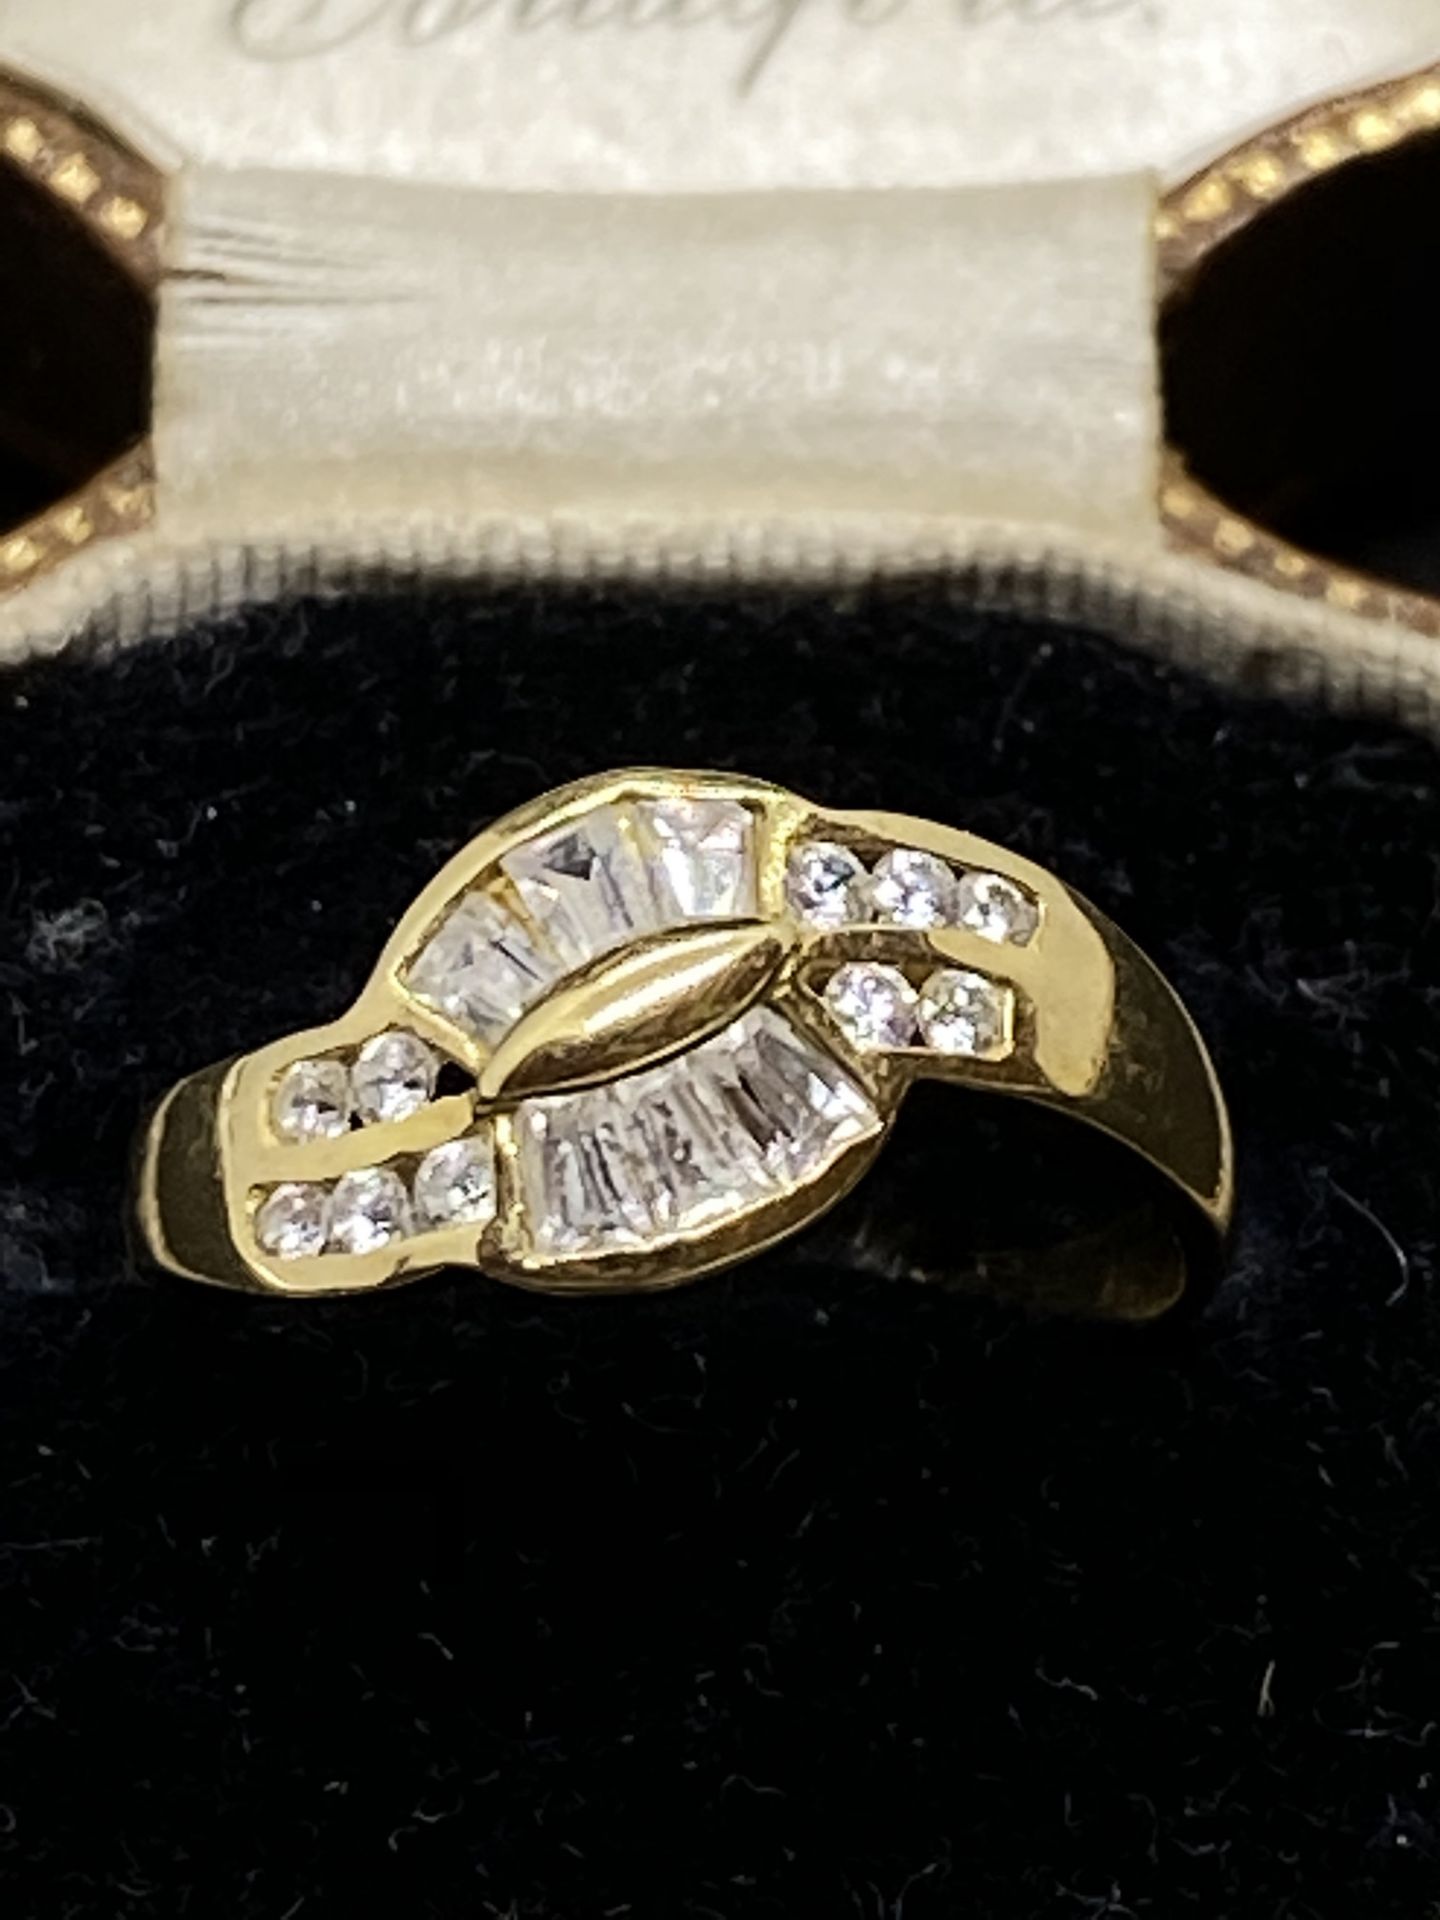 18ct Gold White Stone Set Ring - Image 2 of 3